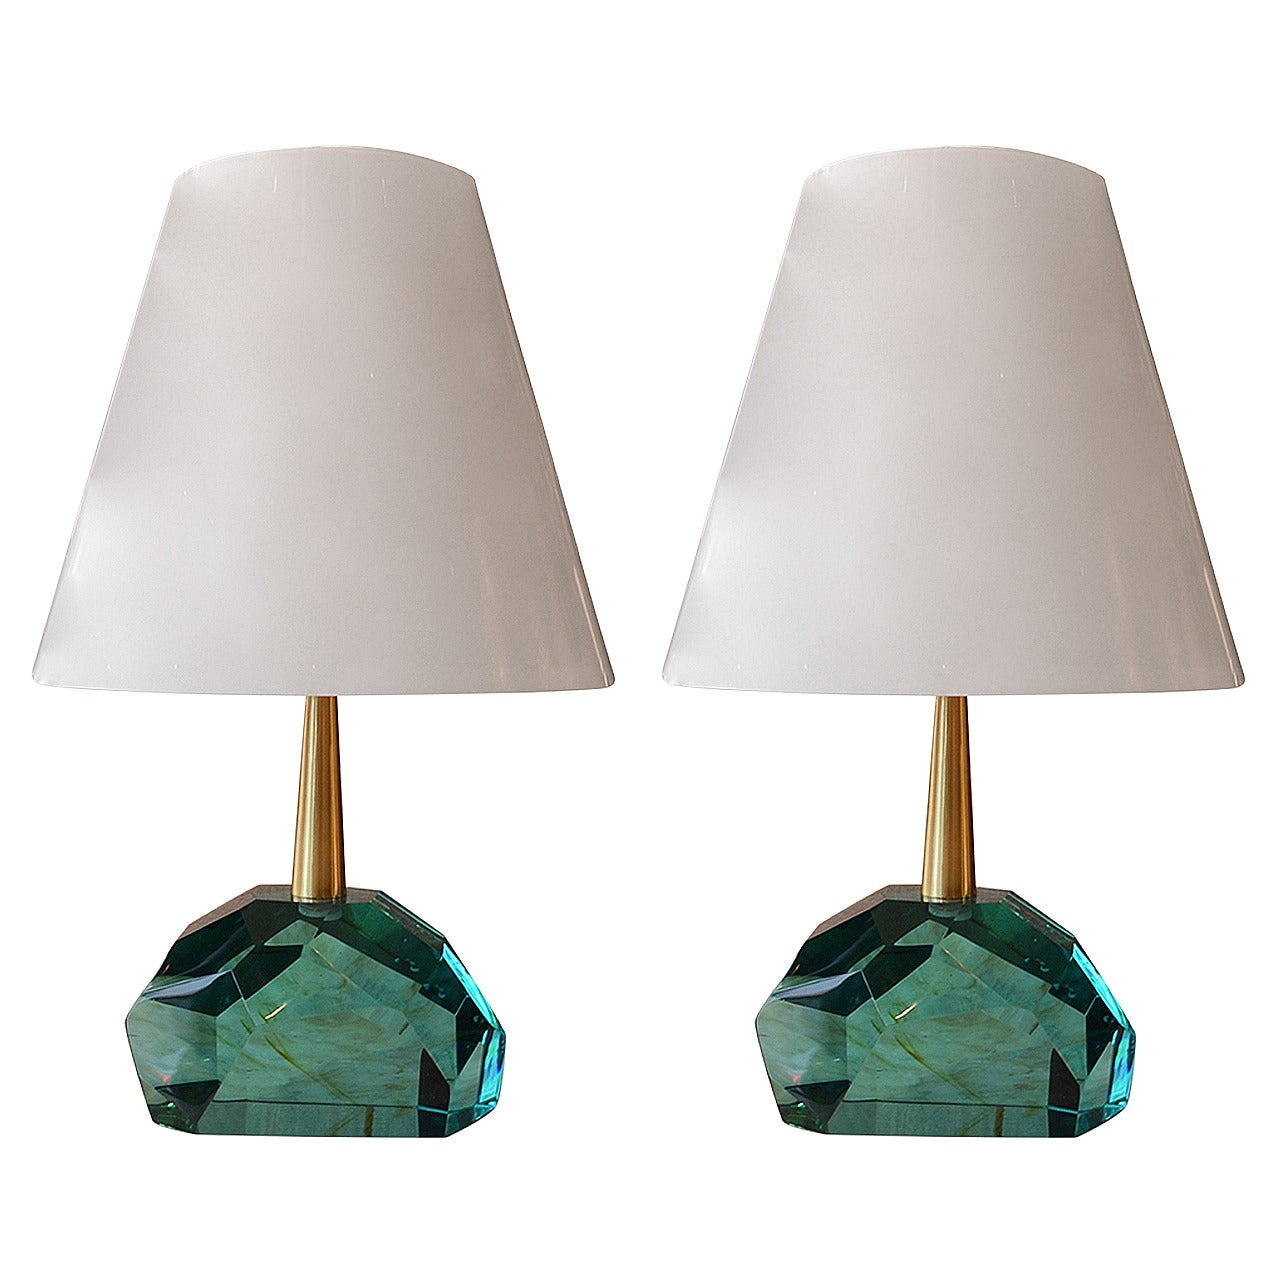 Unique Pair of Table Lamps by Roberto Giulio Rida "Diamantone" For Sale